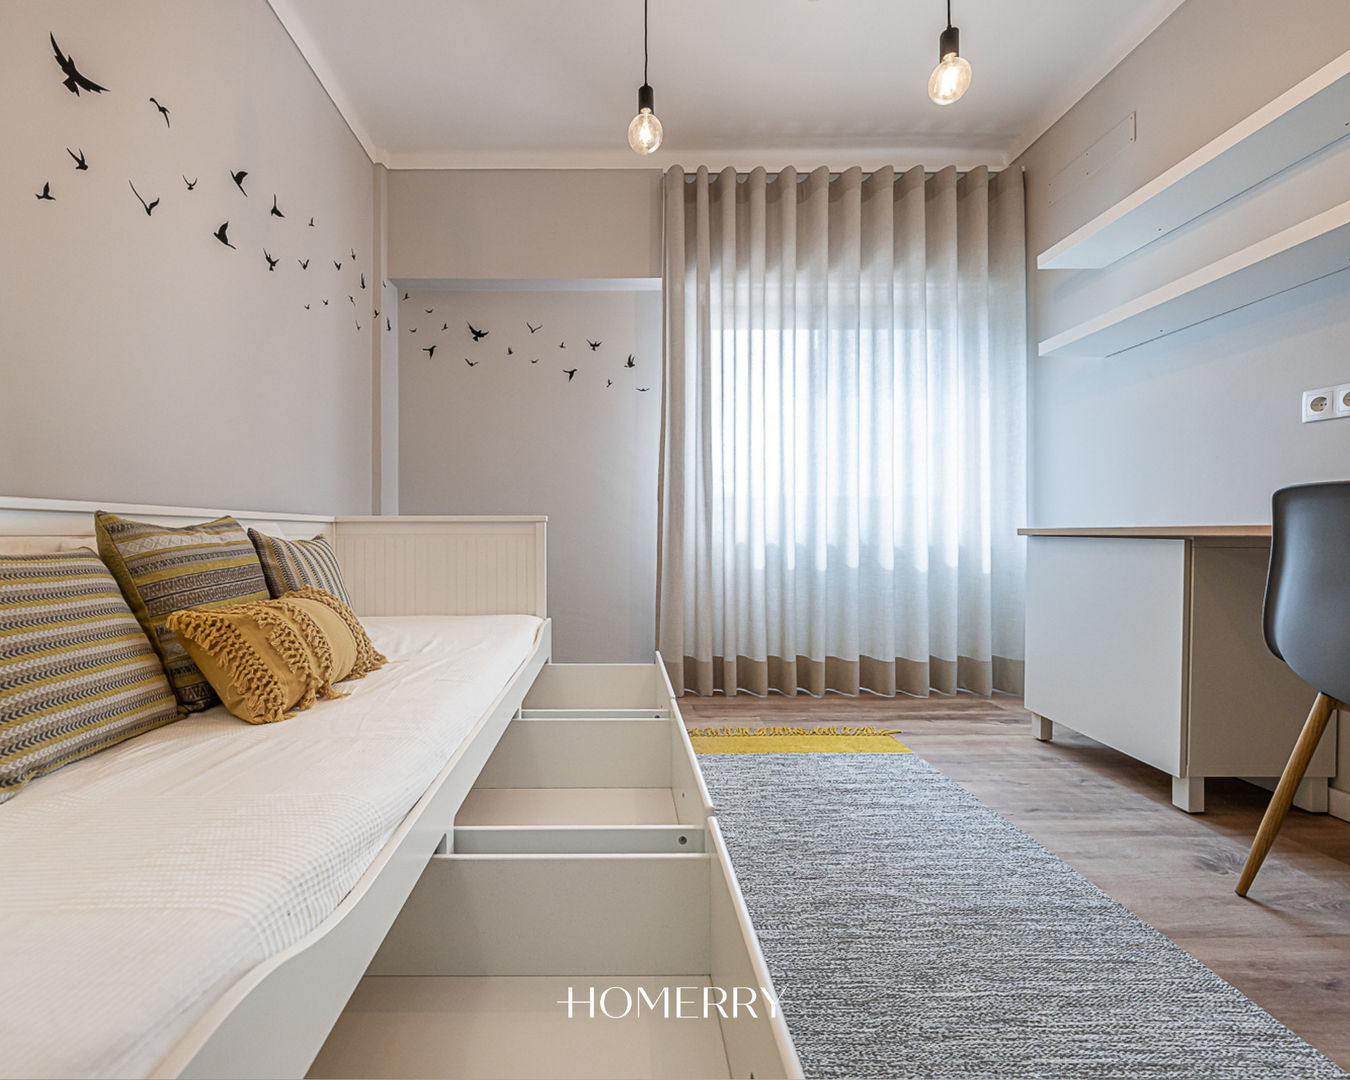 Portugal waits for you. A lovely 2beds in Estoril., HOMERRY HOMERRY Dormitorios de estilo moderno